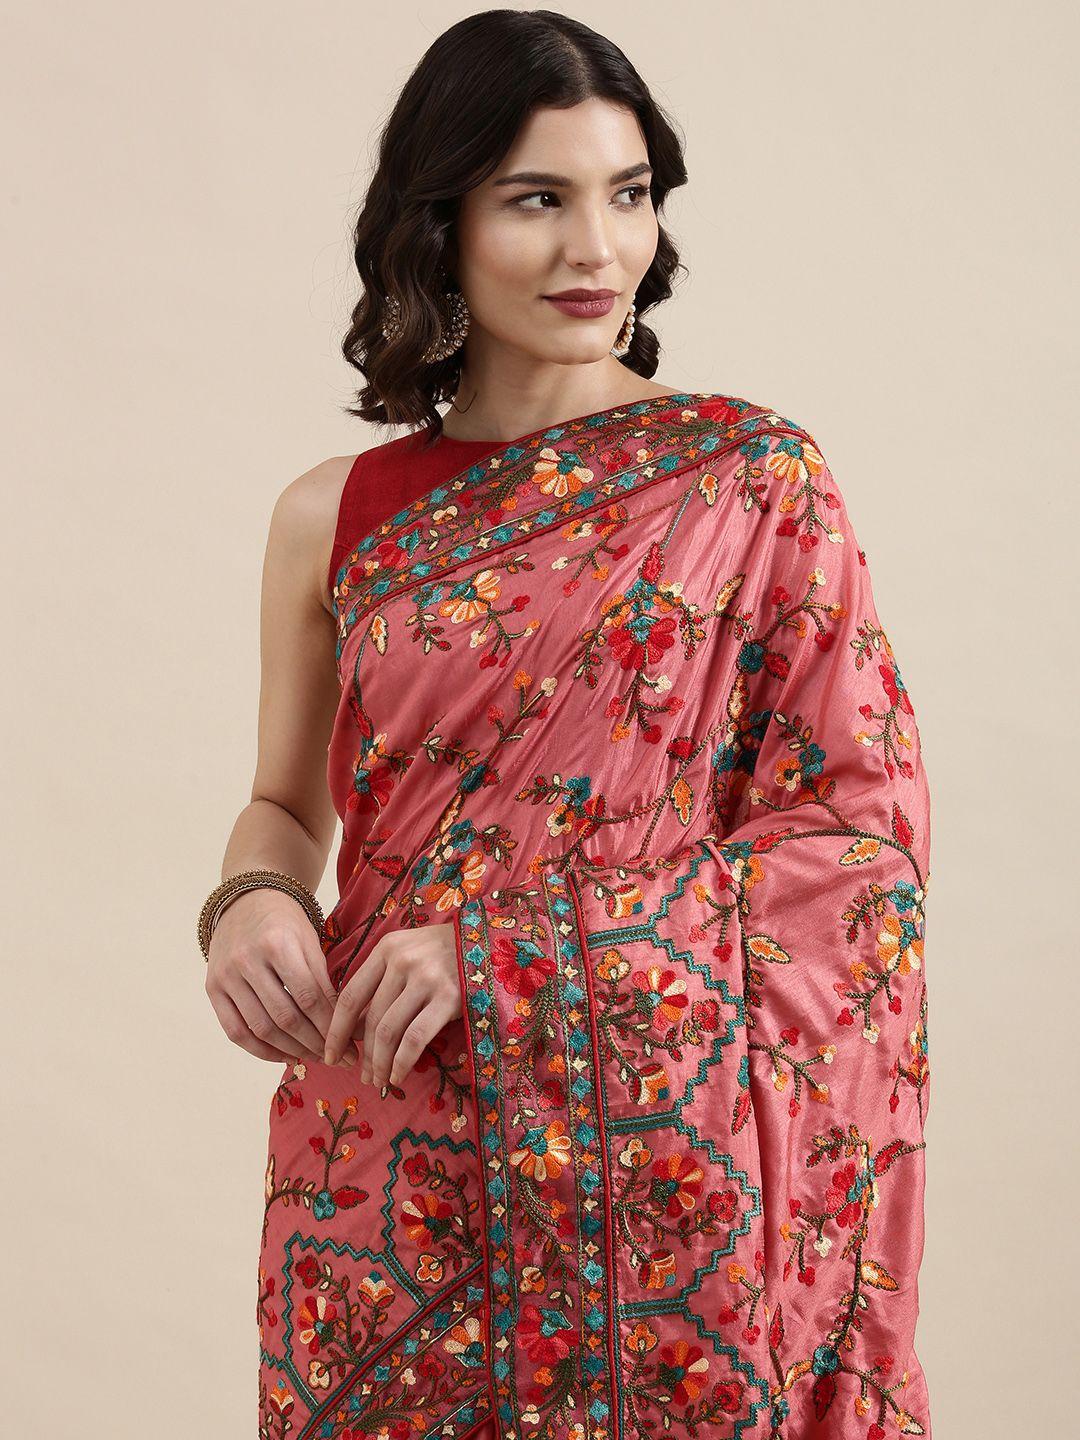 vairagee-dusty-pink-&-teal-blue-ethnic-motifs-embroidered-dola-silk-saree